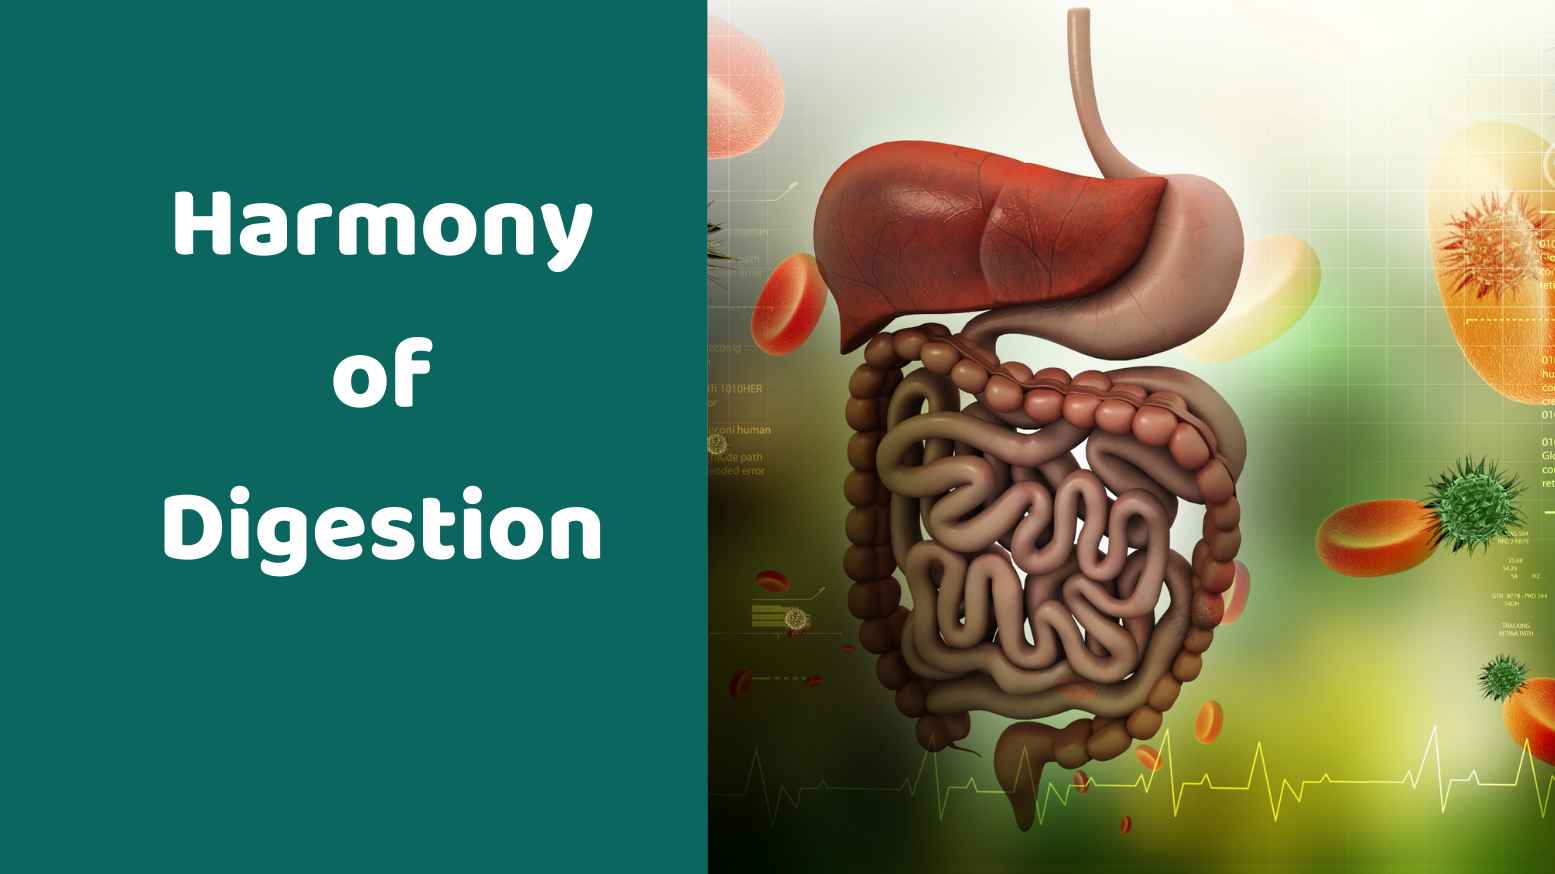 Harmony of Digestion